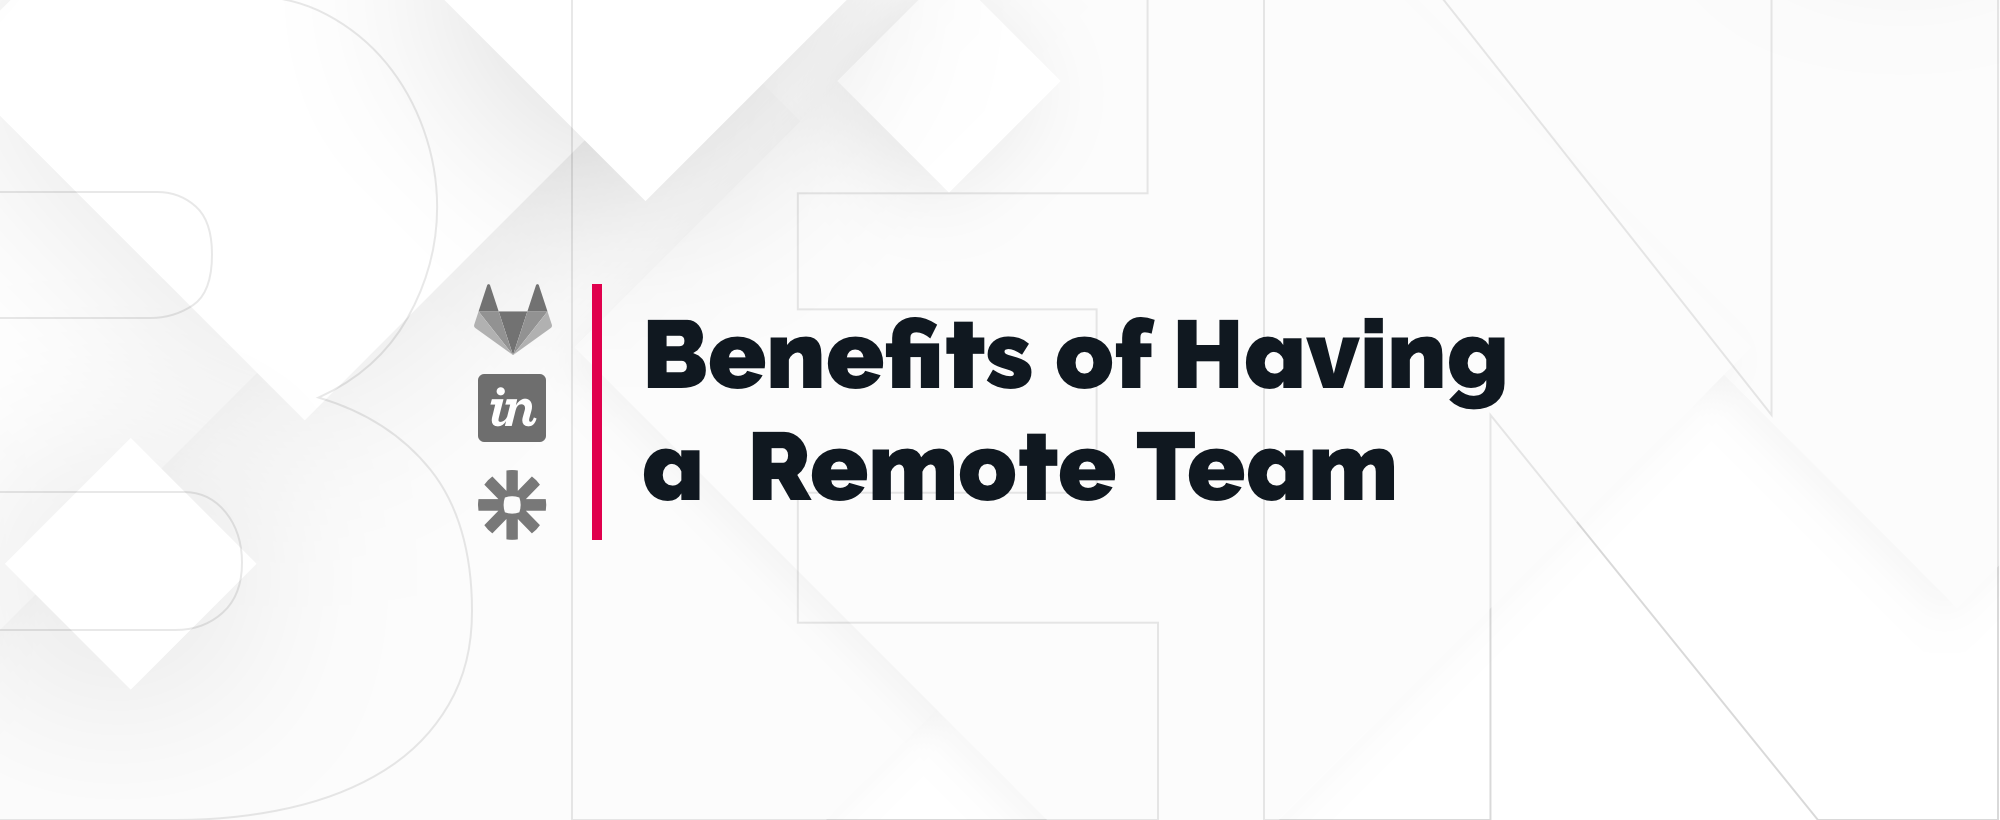 Benefits of Having a Remote Team: Gitlab, InVision, Zapier cases